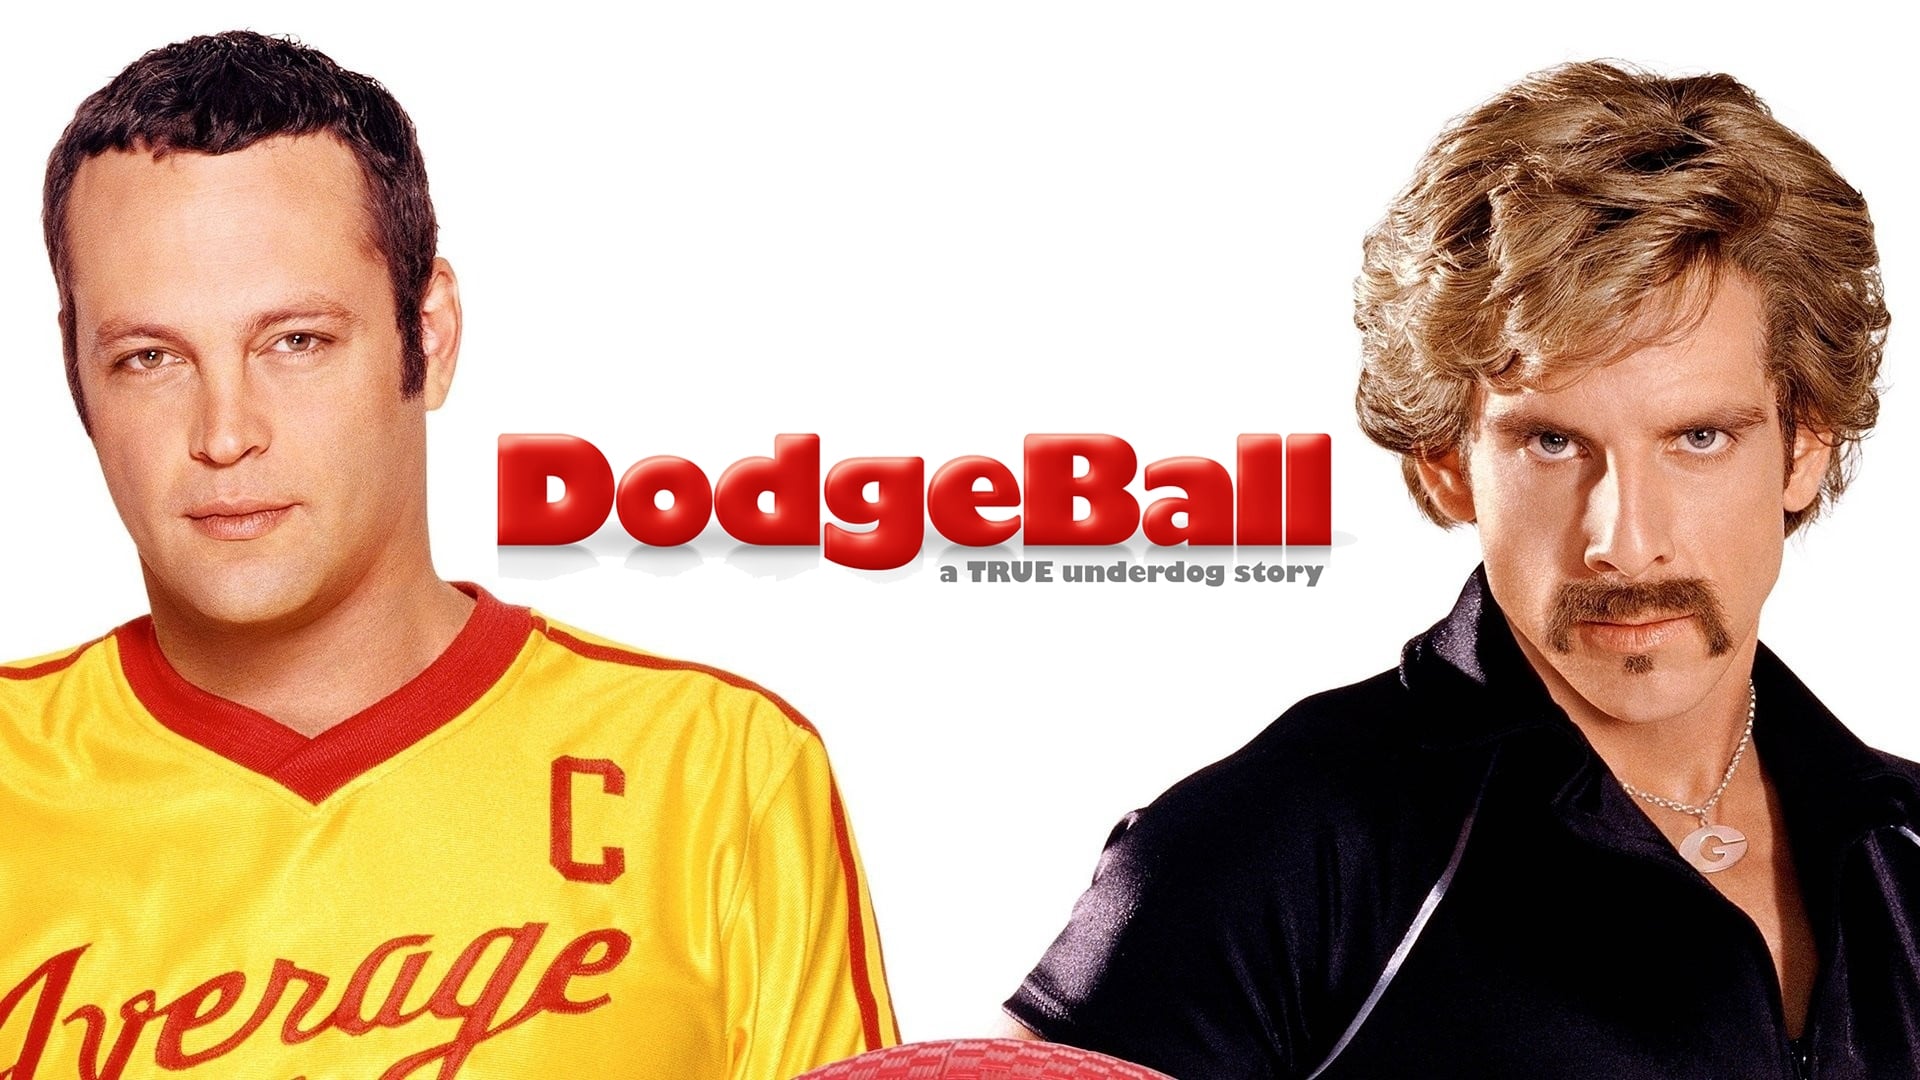 DodgeBall: A True Underdog Story (2004)